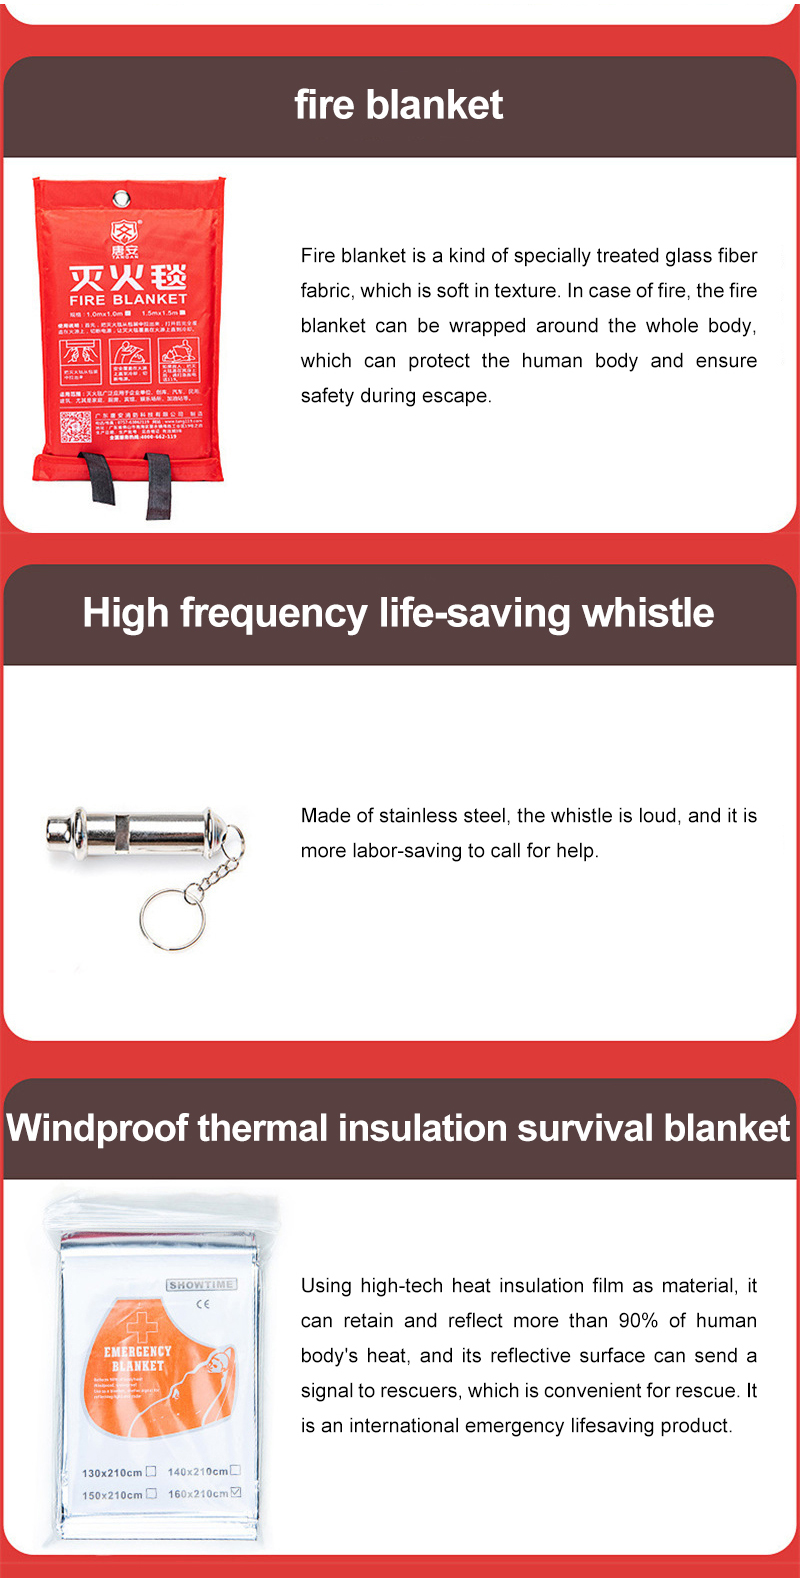 Classic fiberglass fire blanket first aid emergency kit